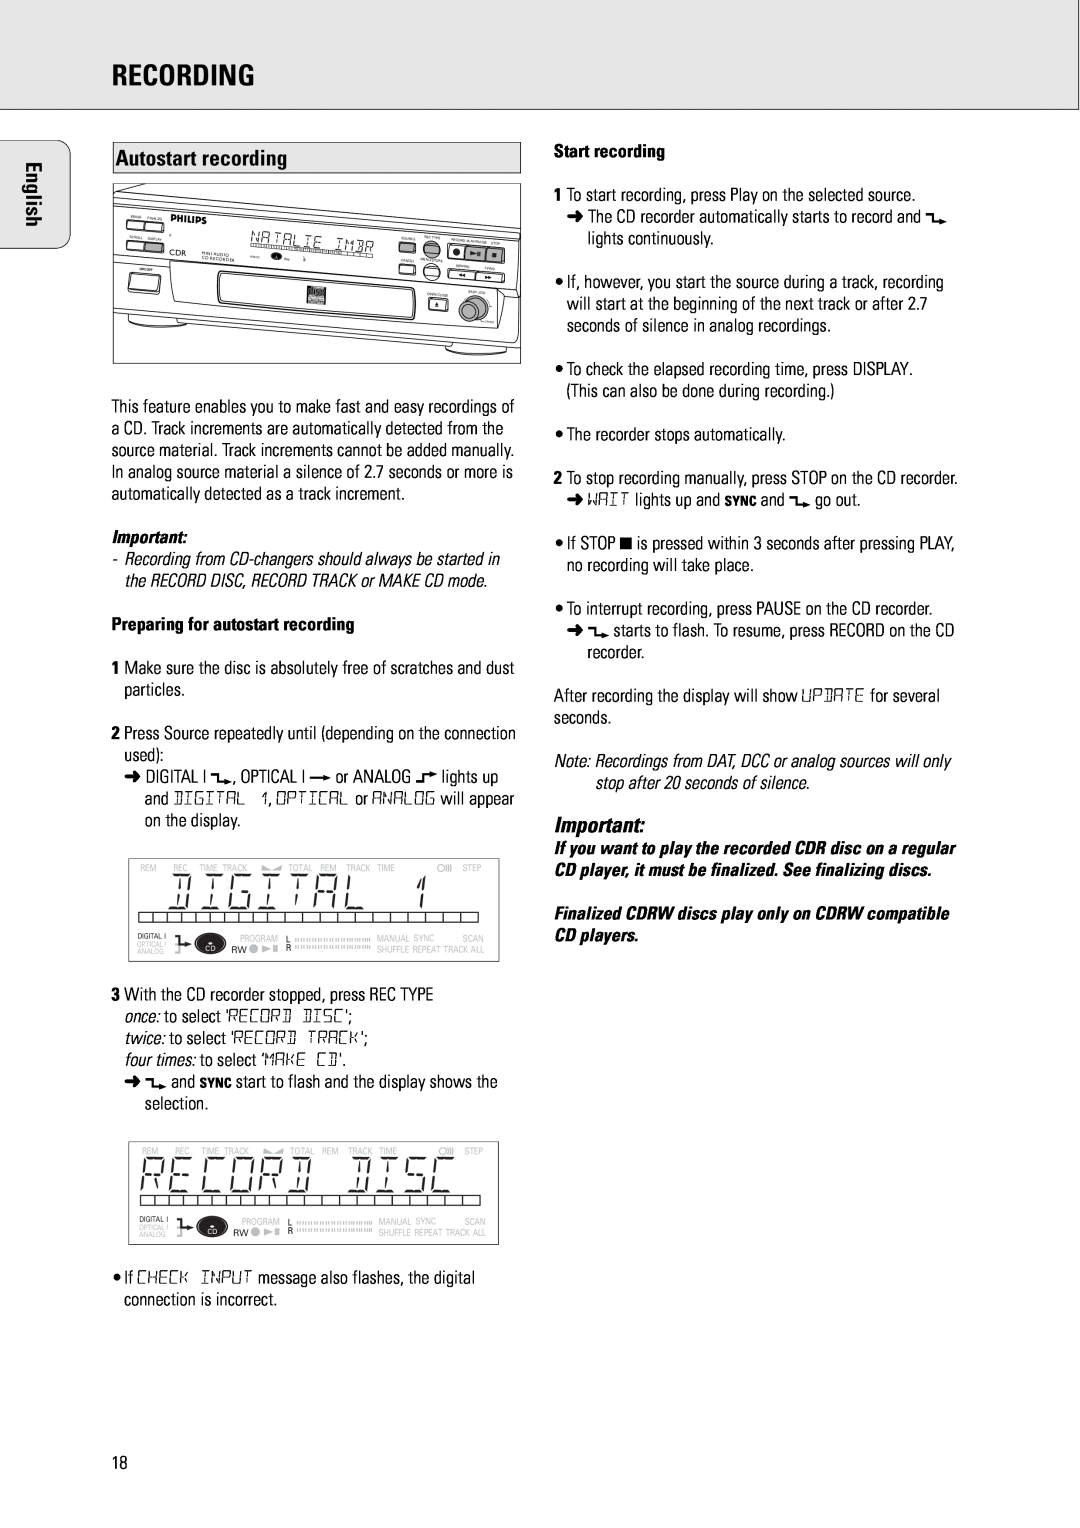 Philips CDR570 manual Autostart recording, Preparing for autostart recording, Start recording, Recording, English 